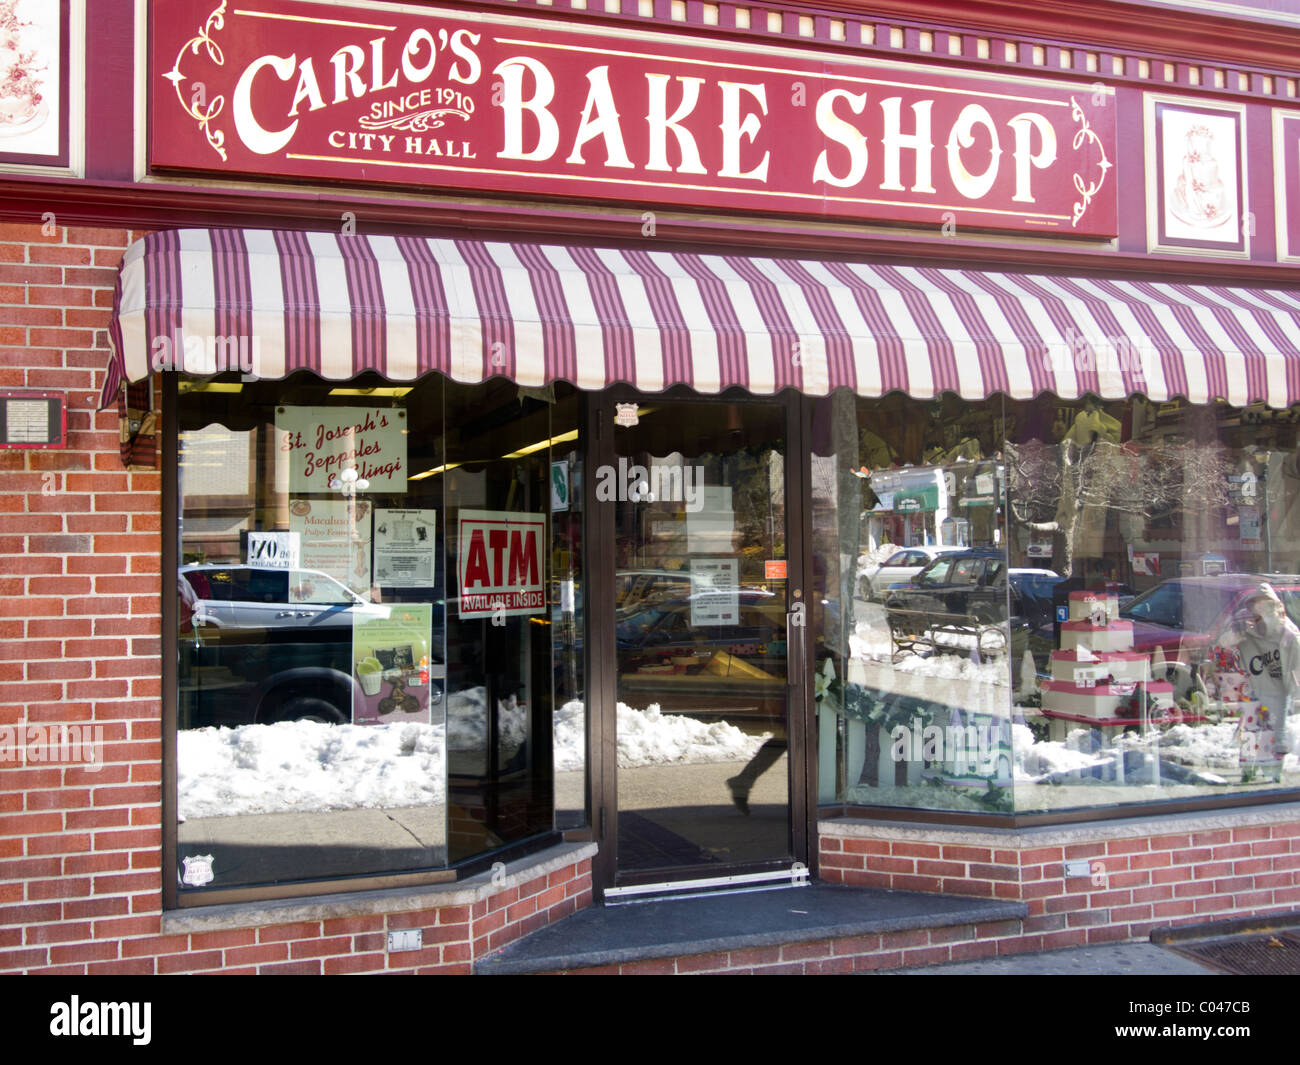 Carlos bakery hoboken new jersey fotografías e imágenes de alta resolución  - Alamy